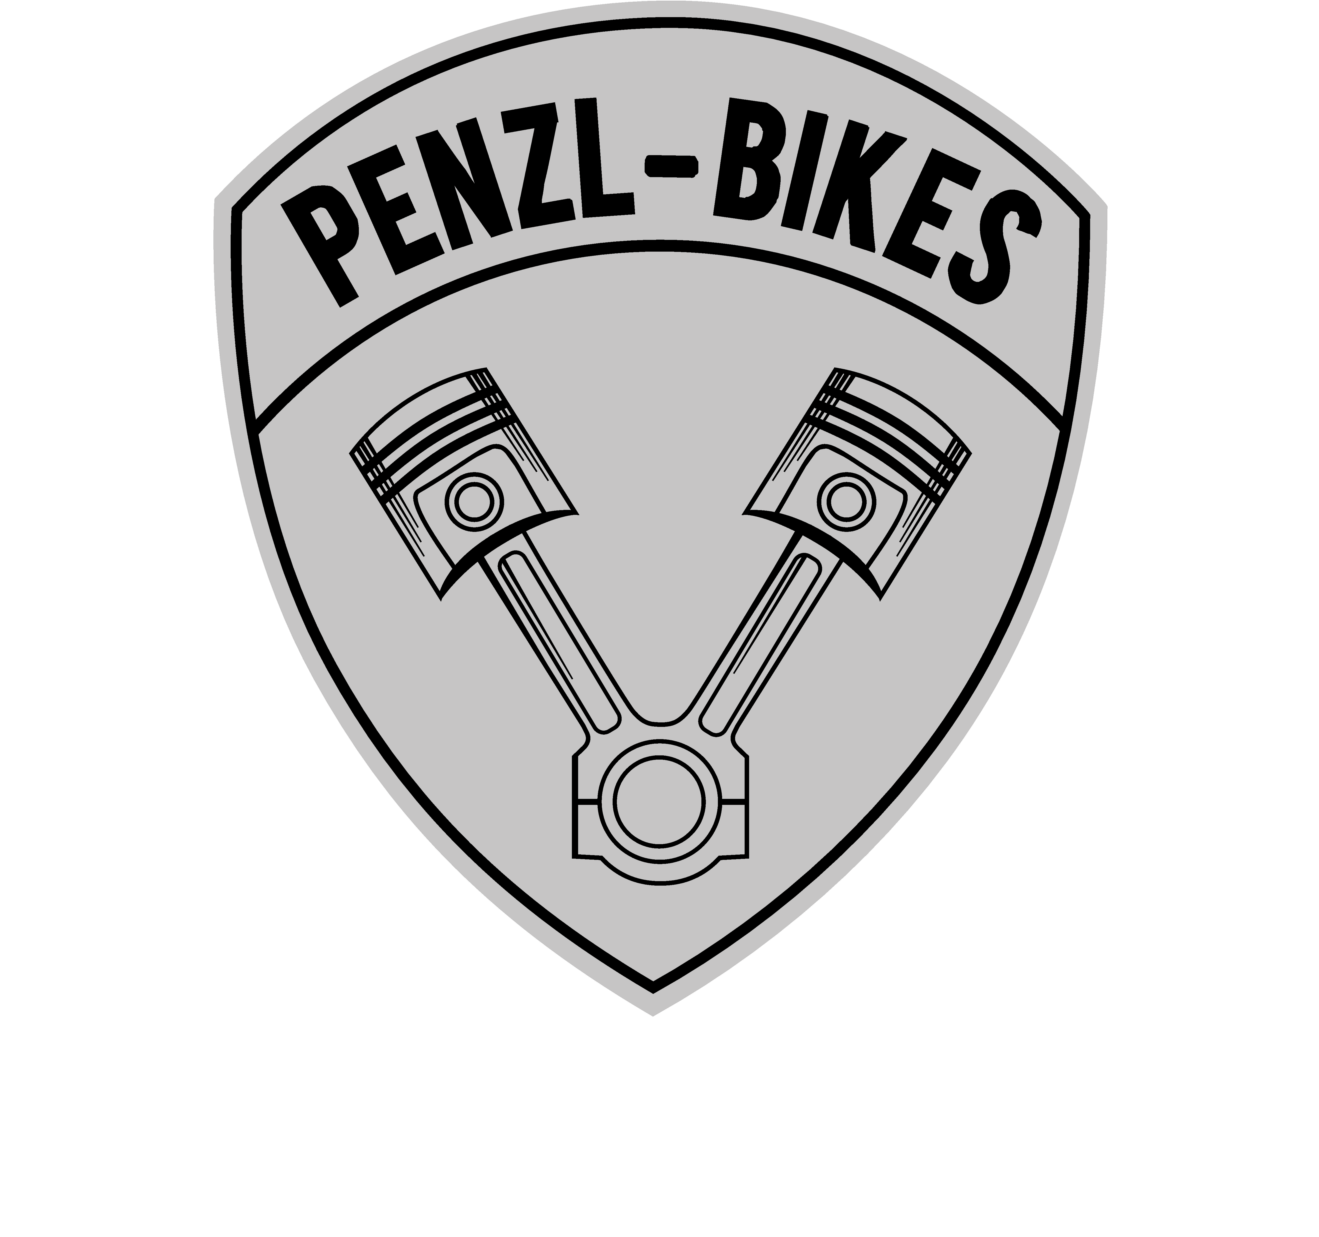 Penzl Bikes, Lakeside Motorcycles Lochau